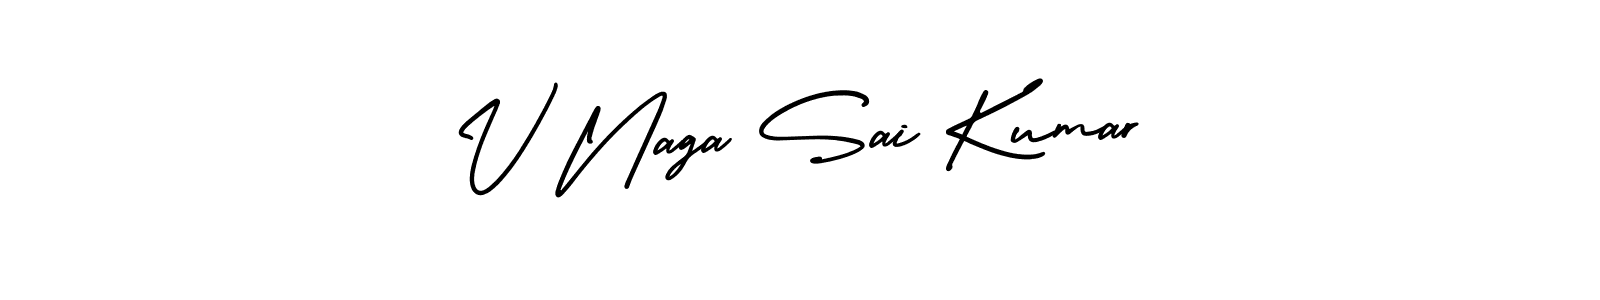 How to Draw V Naga Sai Kumar signature style? AmerikaSignatureDemo-Regular is a latest design signature styles for name V Naga Sai Kumar. V Naga Sai Kumar signature style 3 images and pictures png